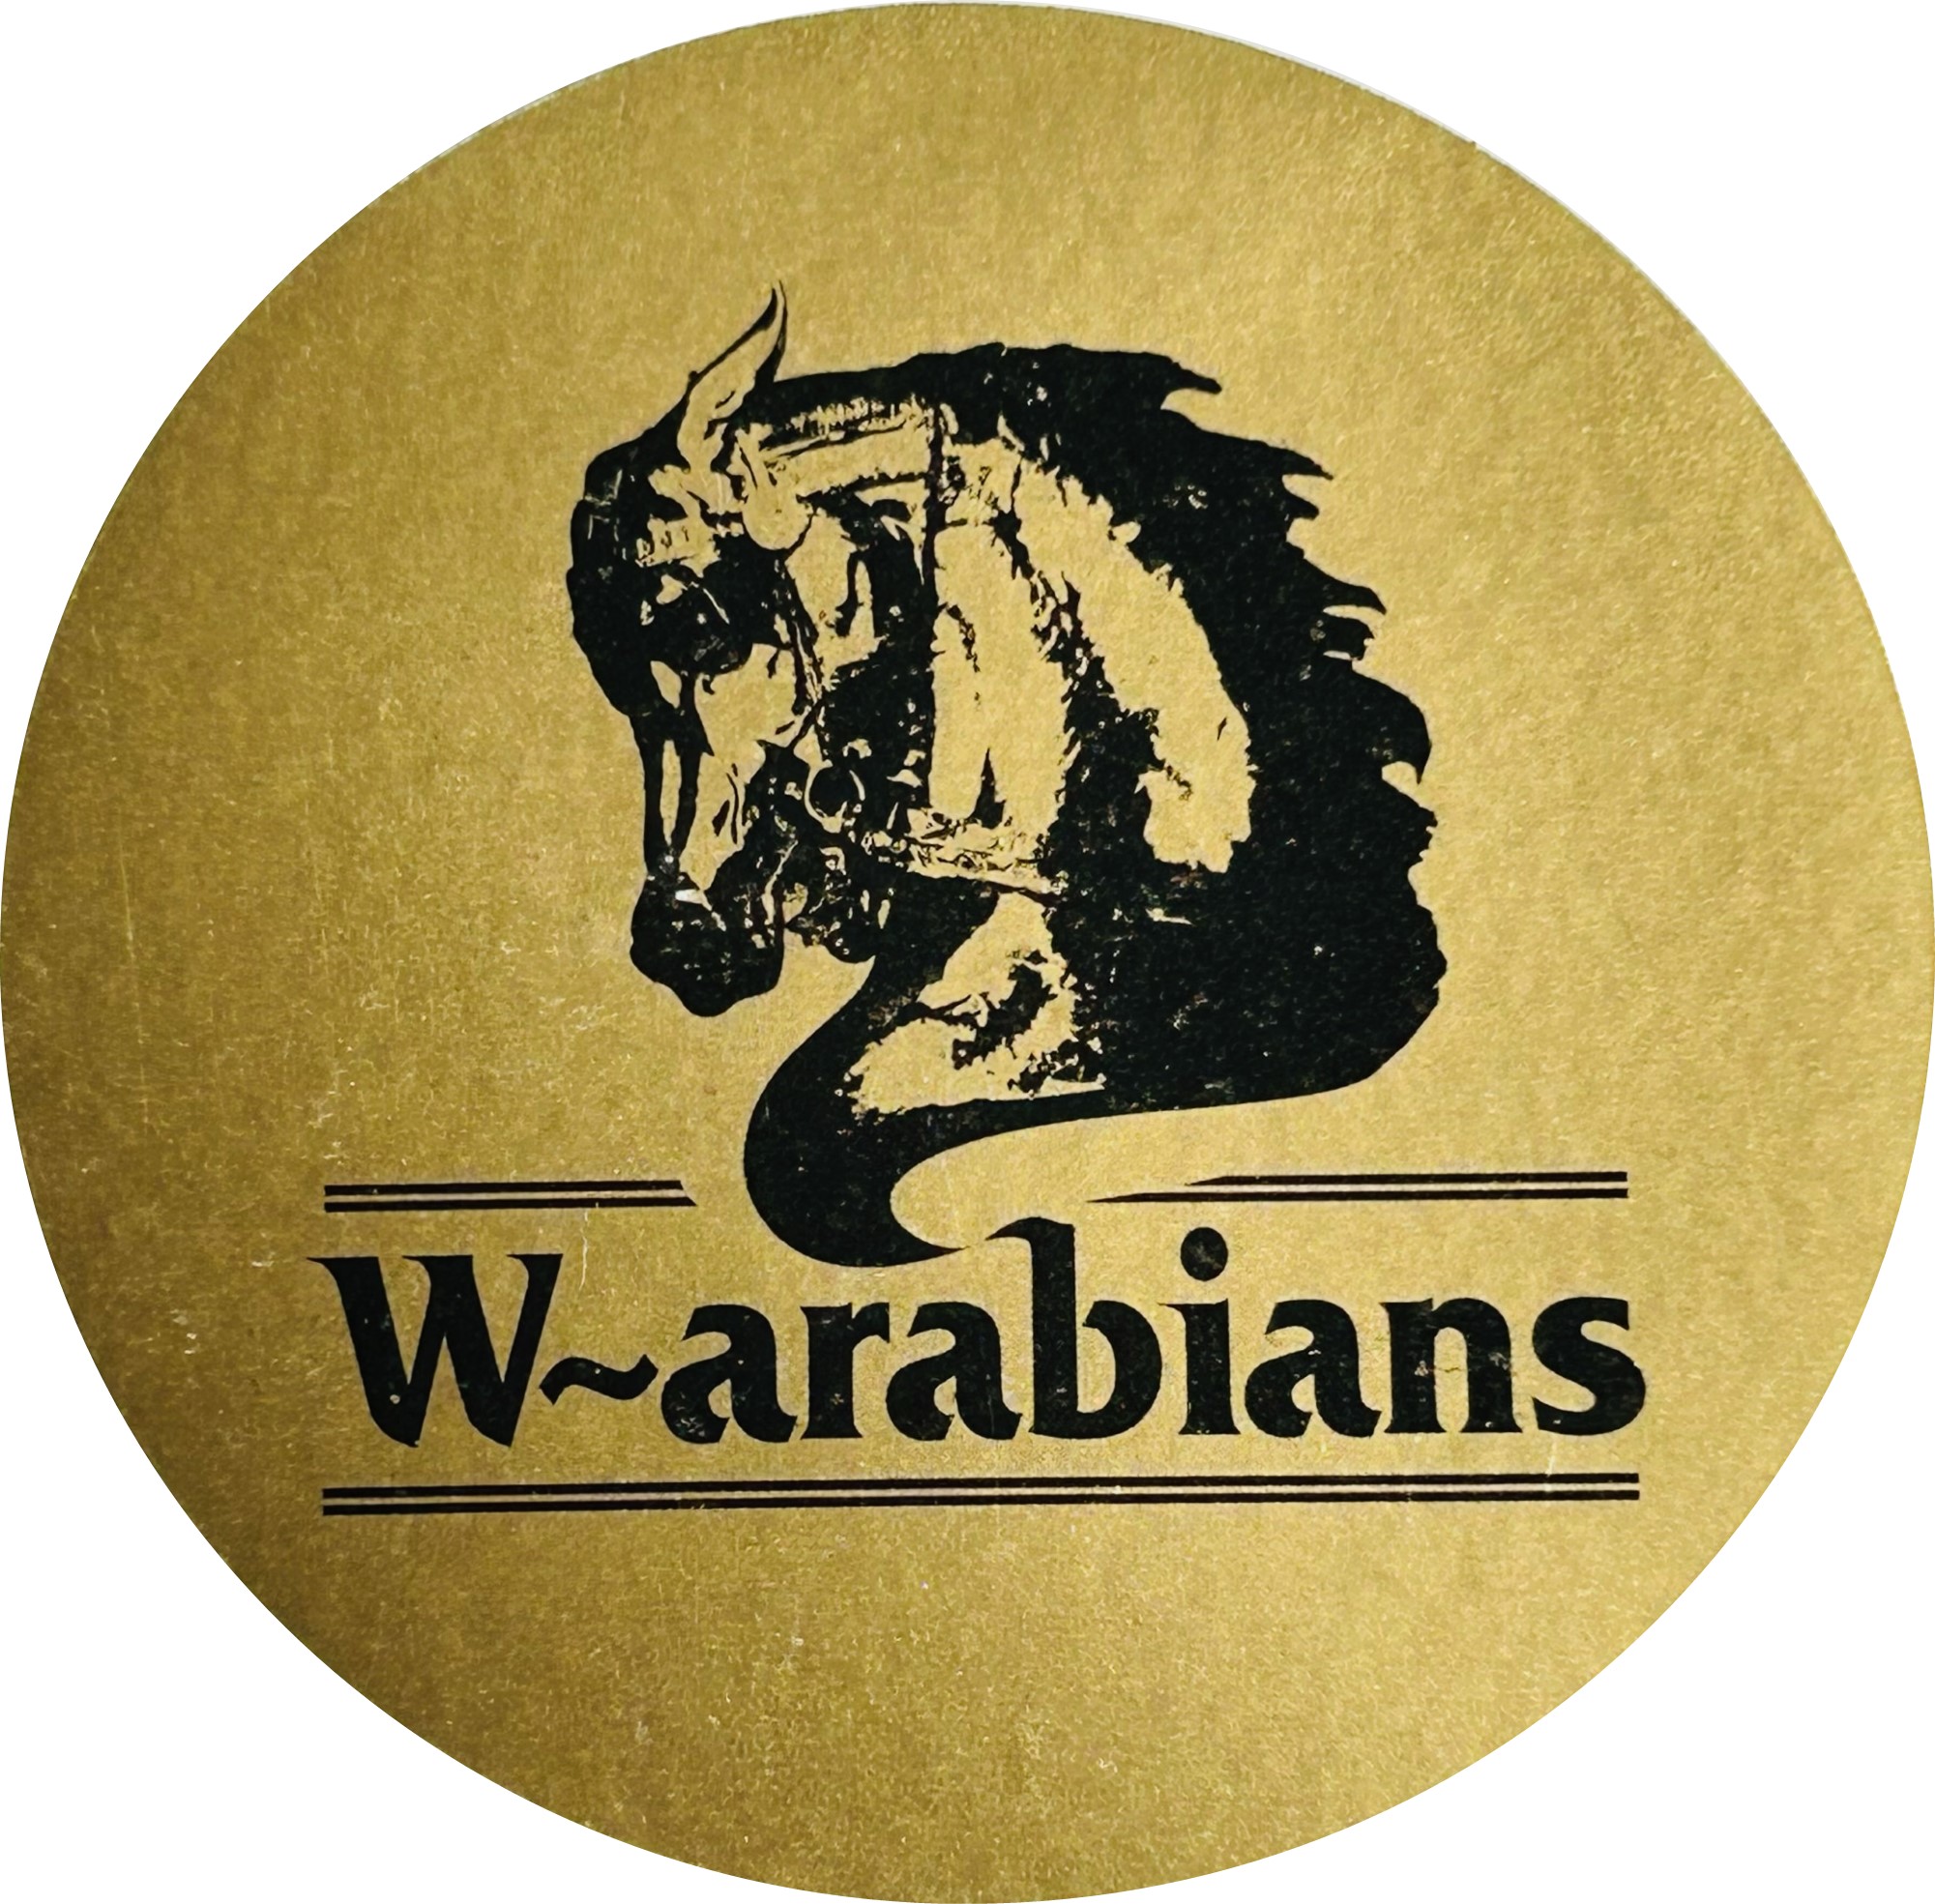 W-Arabians